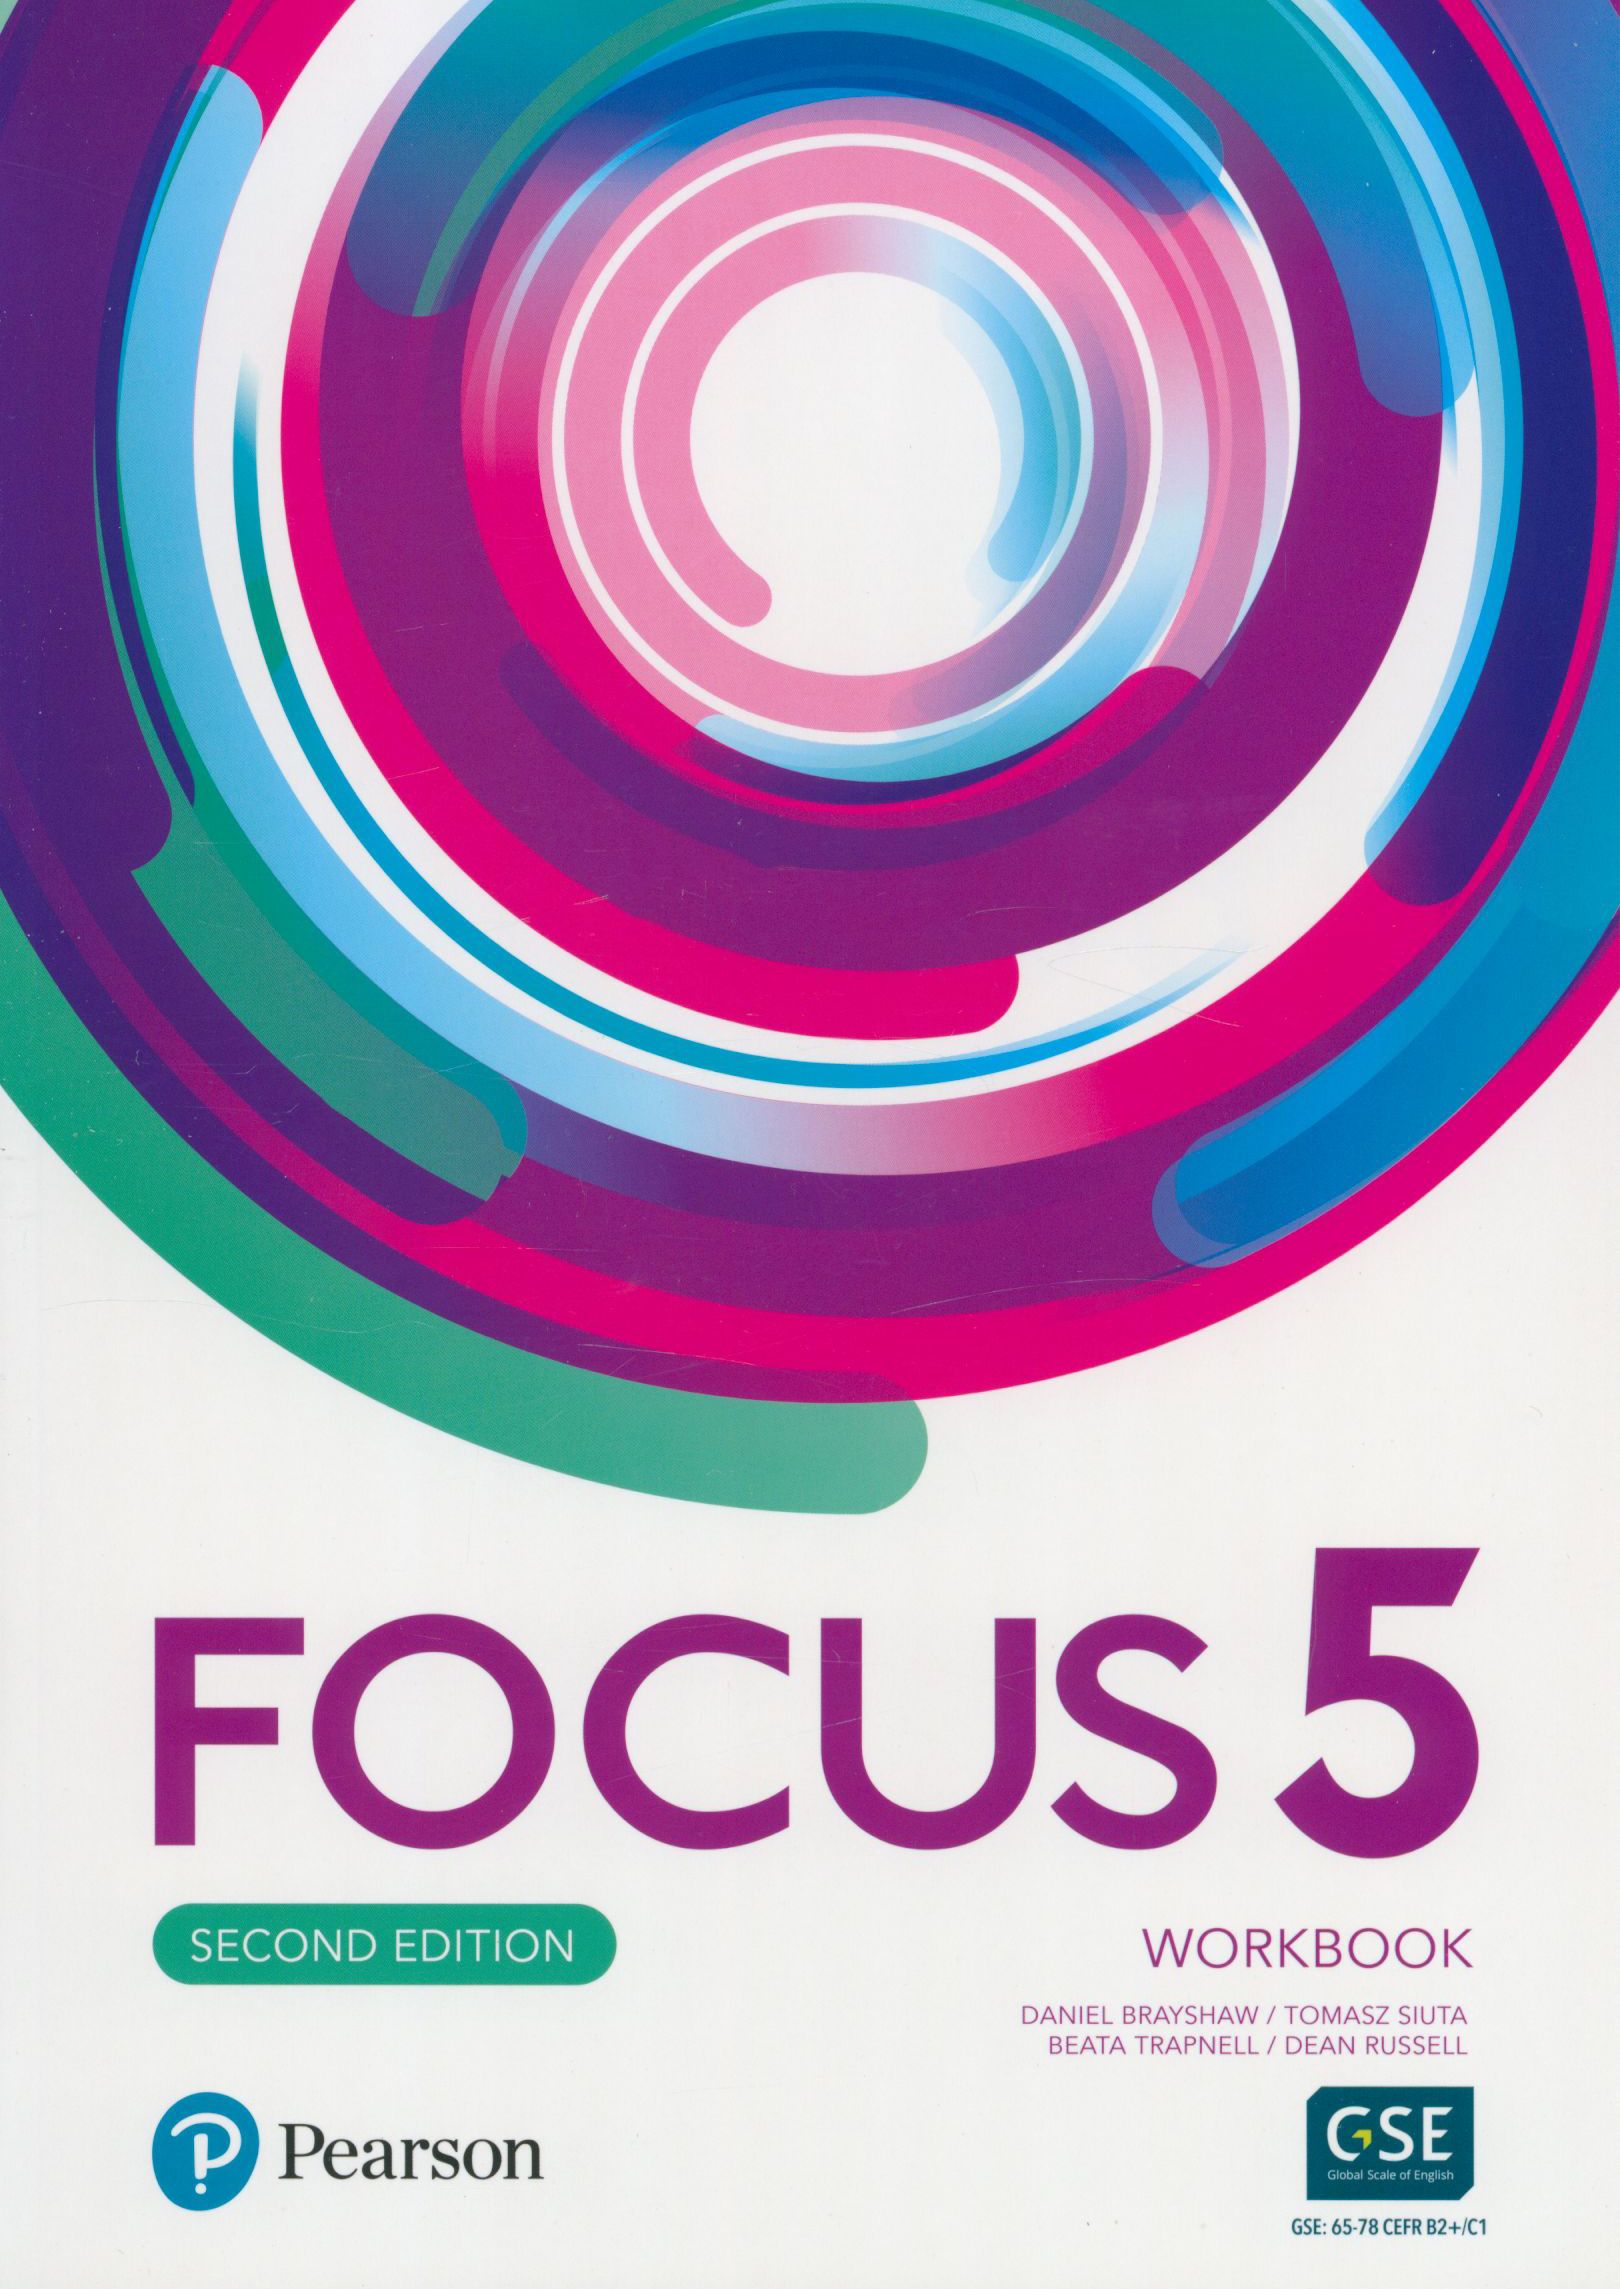 Workbook 5 2023. Focus 5 second Edition. Focus second Edition Level 2. Focus 5 Pearson. Focus 5 Workbook book second.